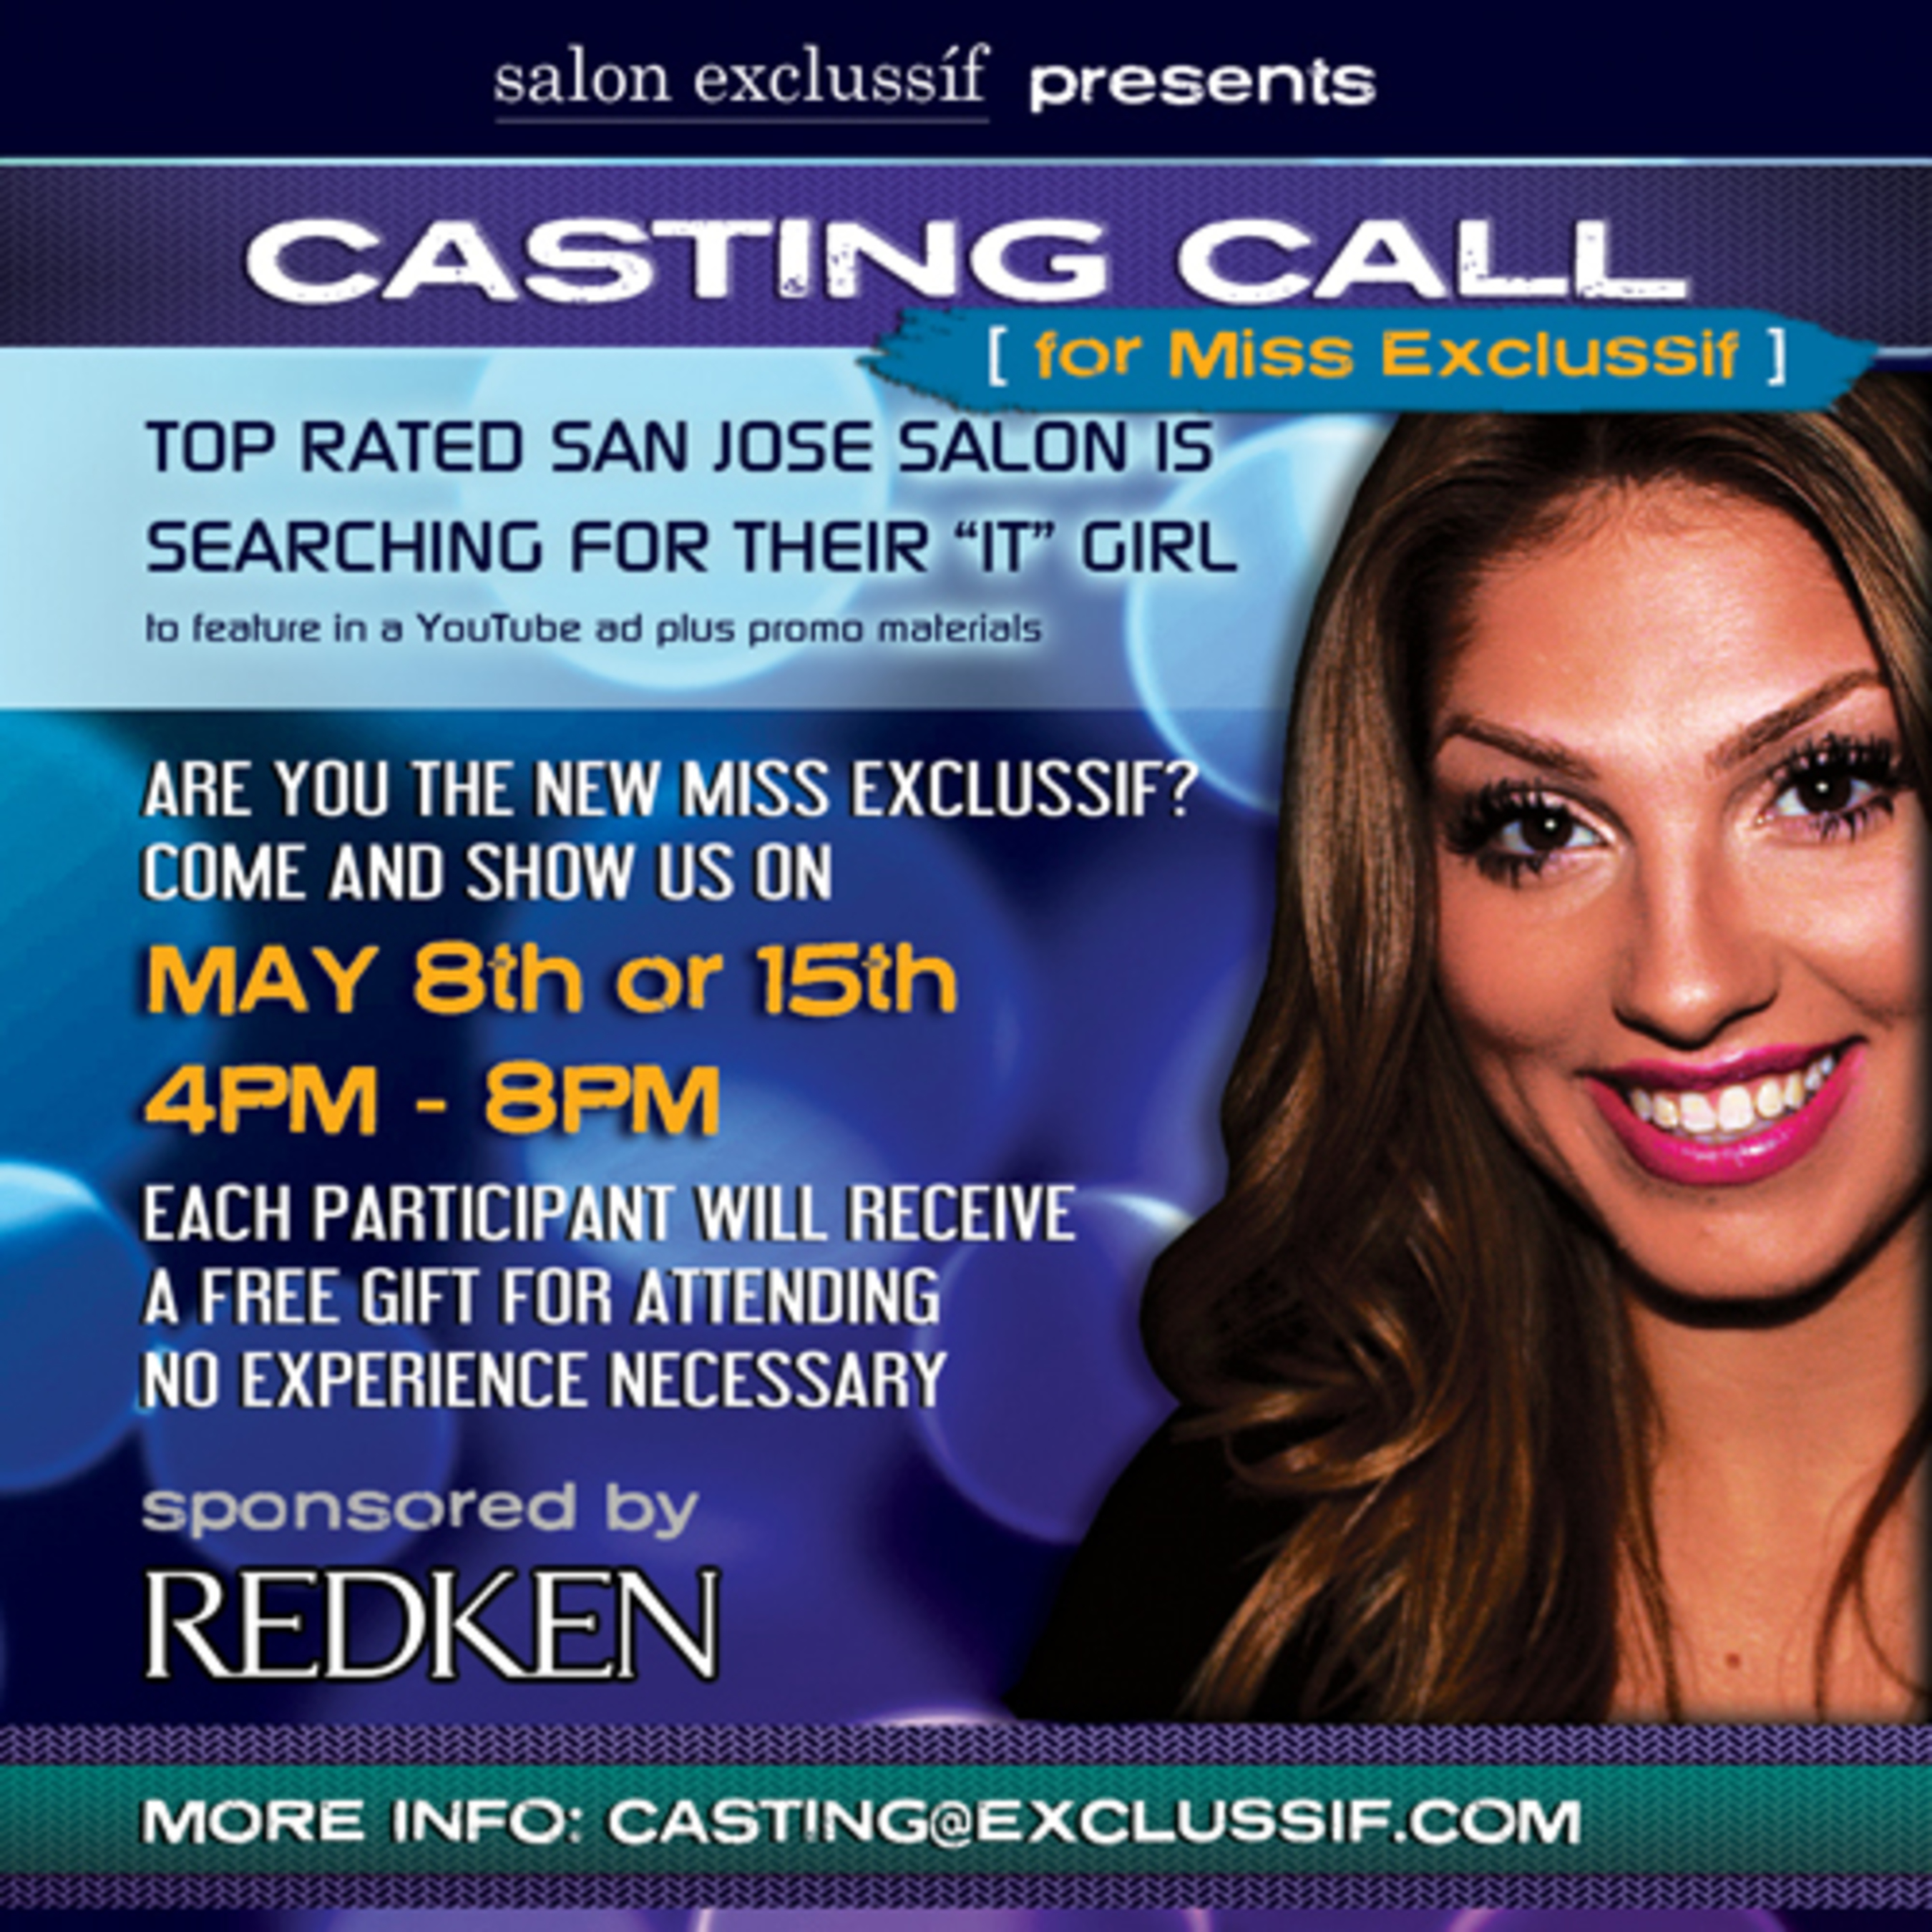 San Jose hair salon spokesmodel casting call (PRNewsFoto/Salon Exclussif)